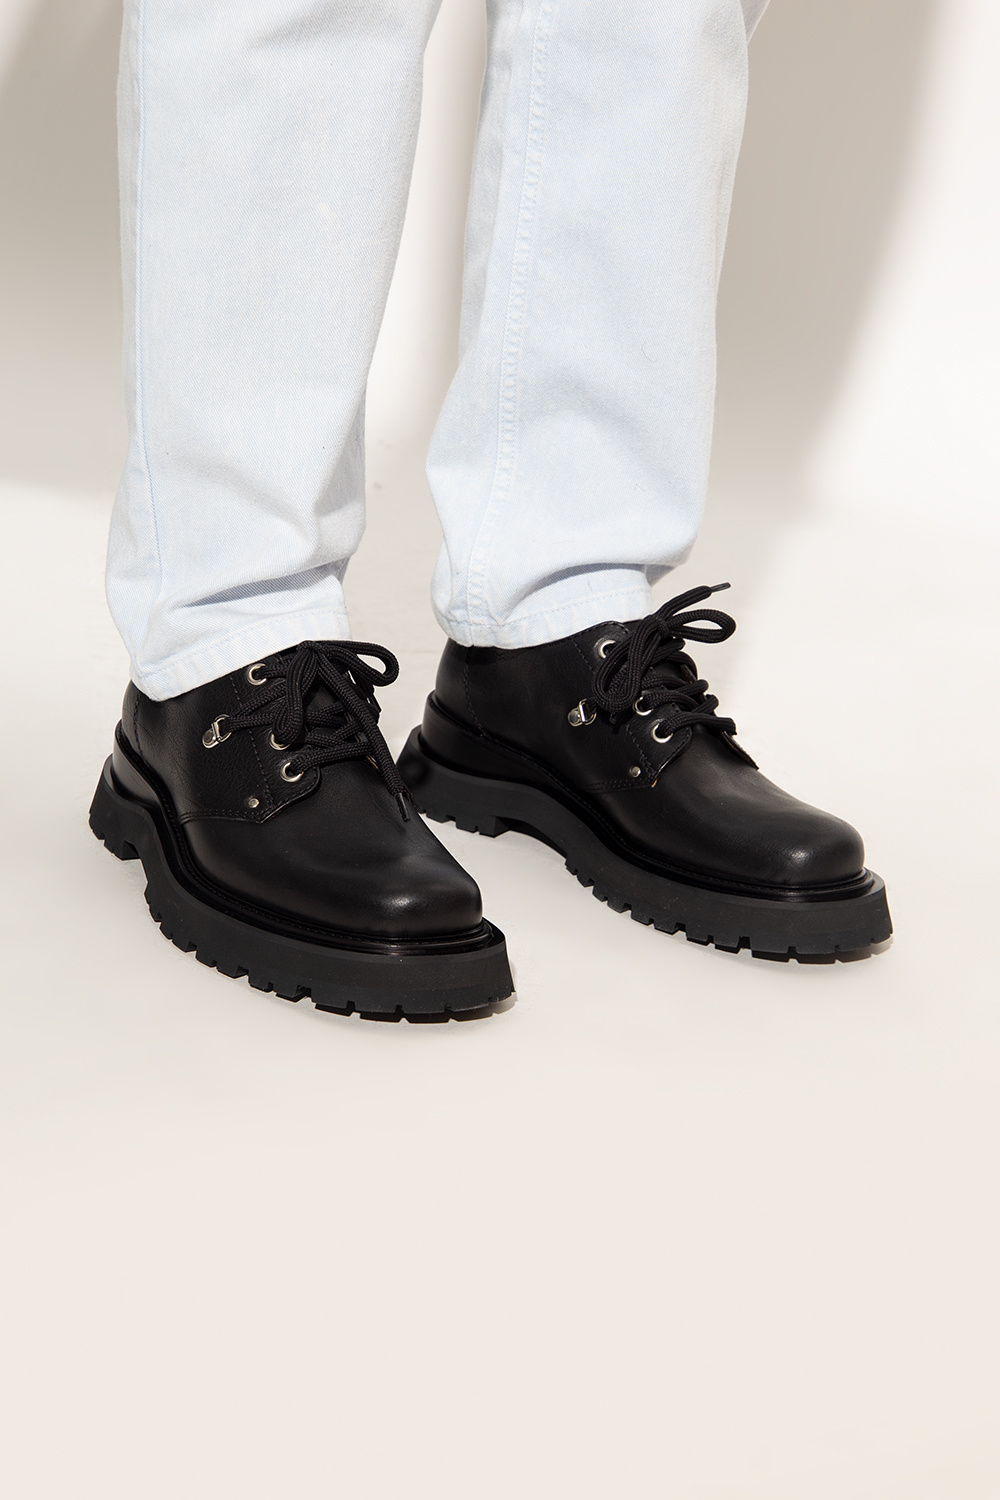 Snow Boots SUPERFIT GORE-TEX 1-006312-6000 S Gelb Blau Derby shoes